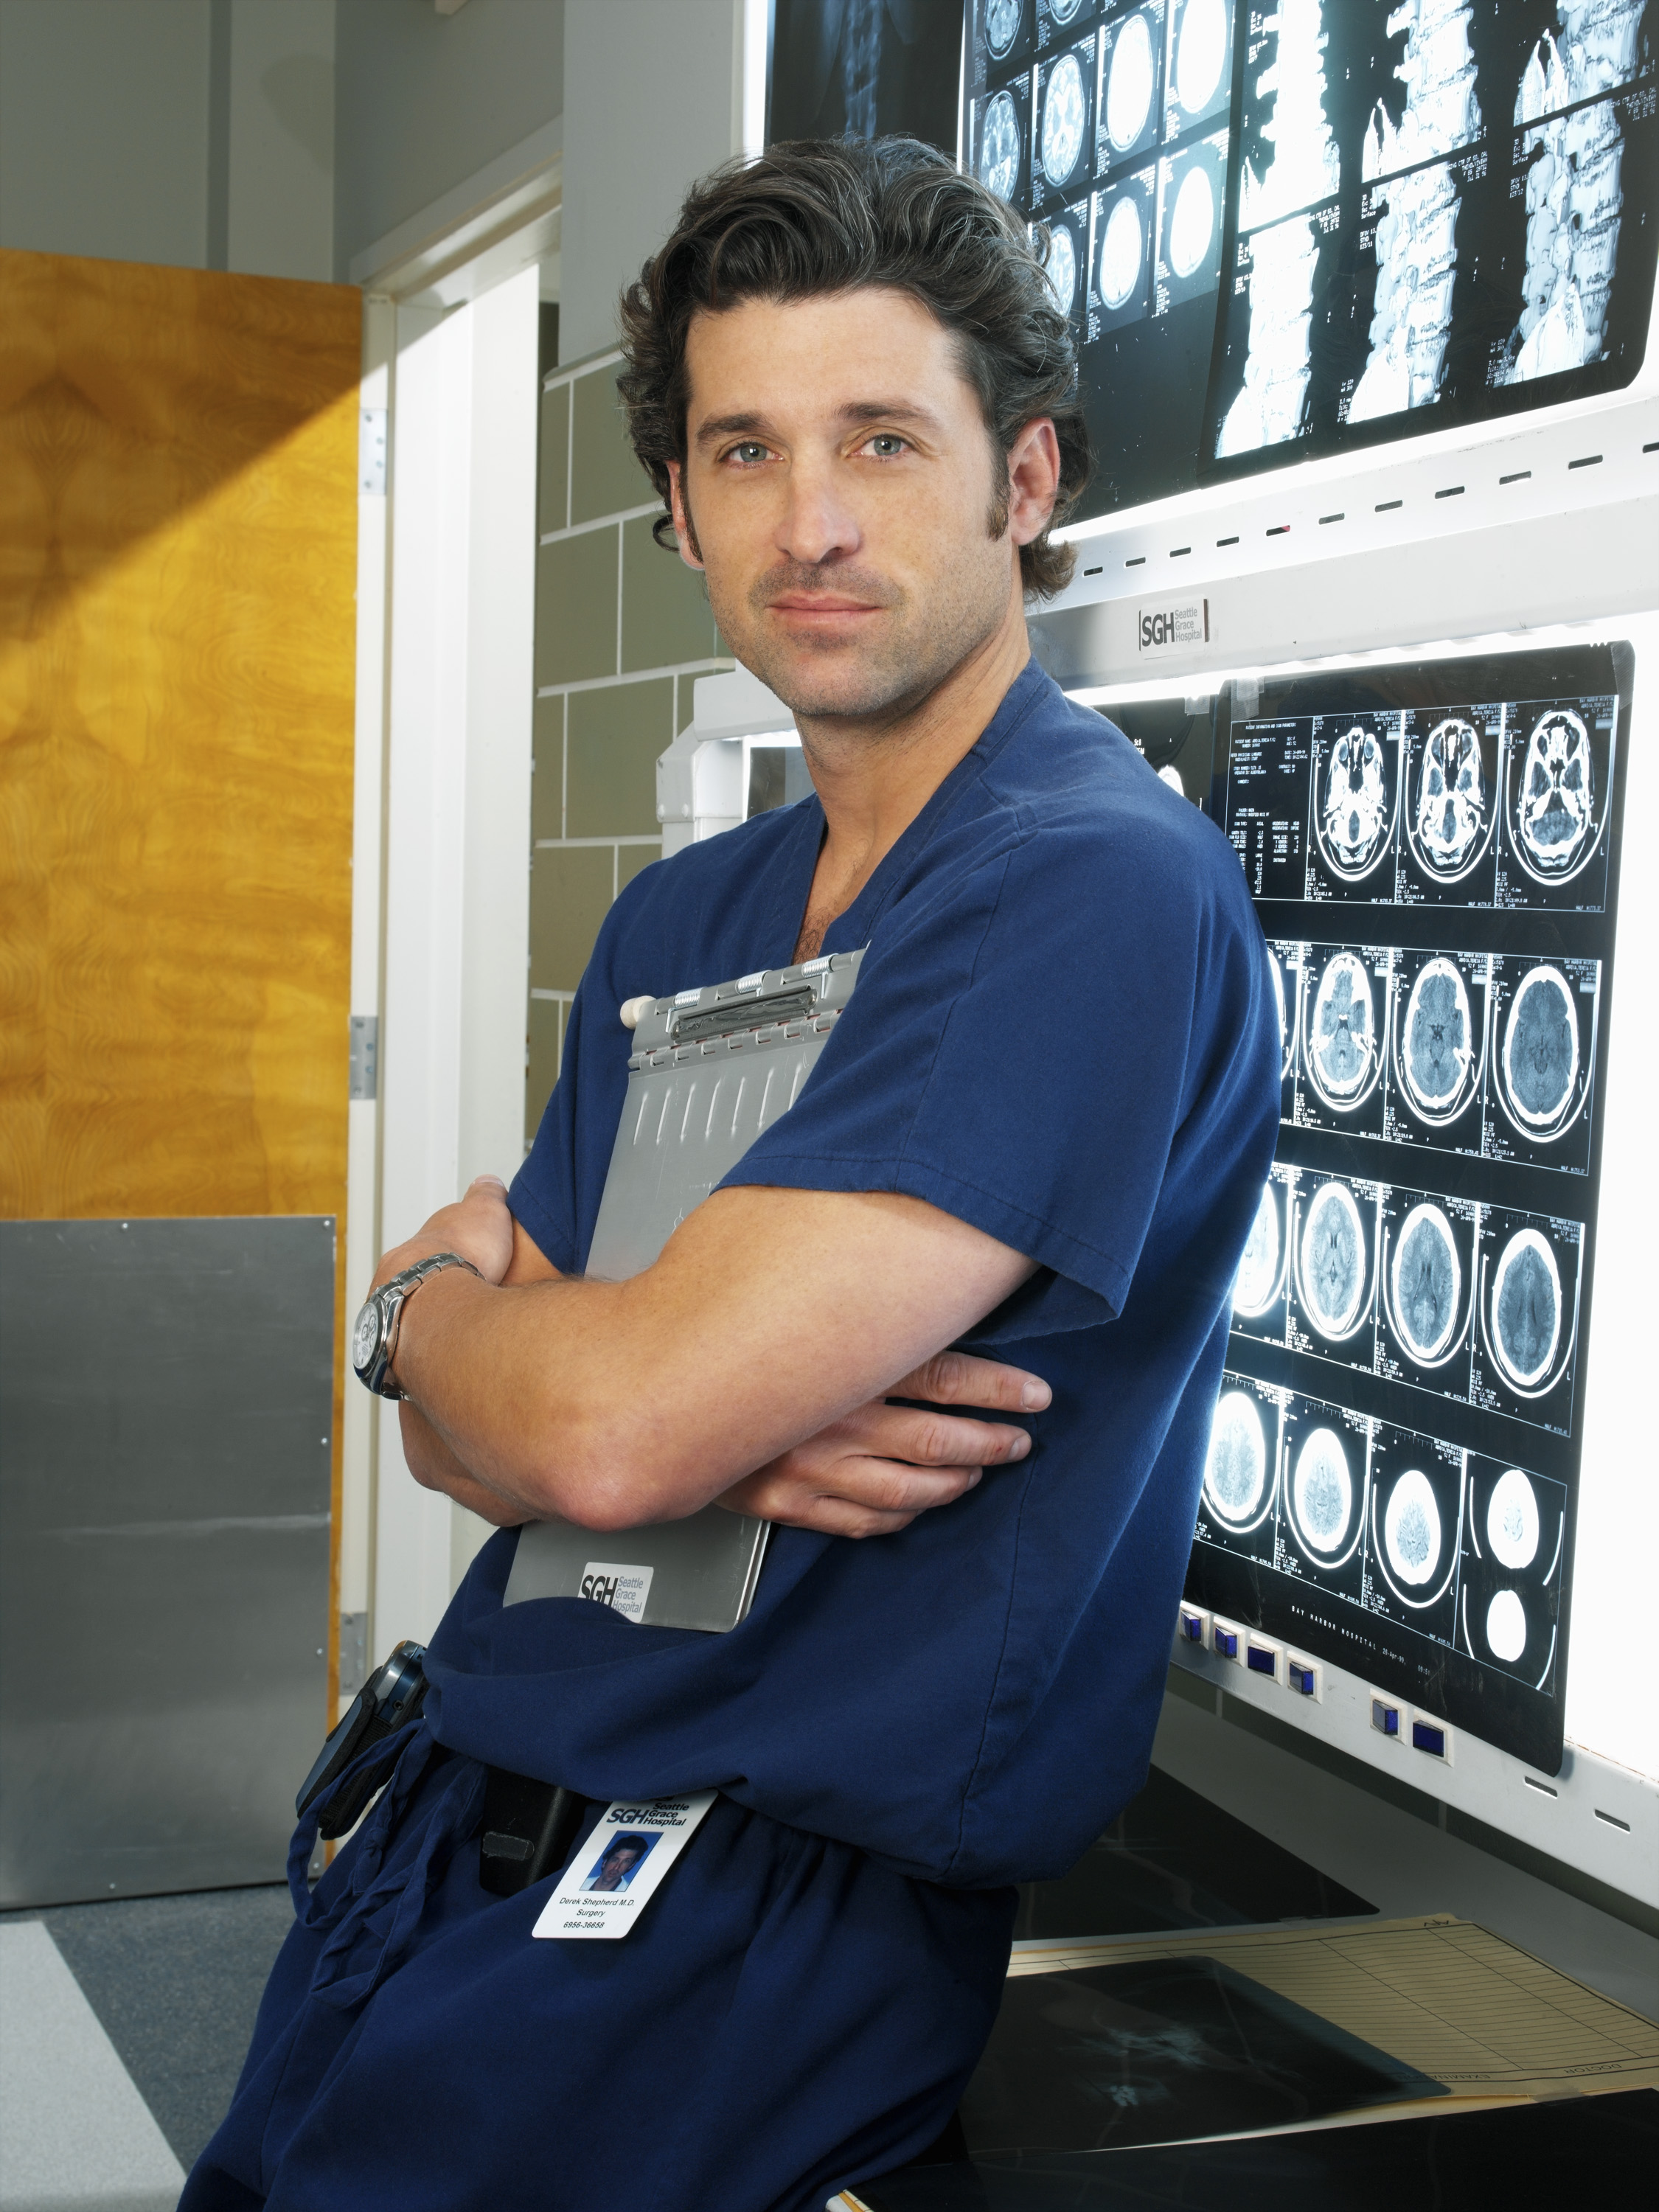 Patrick Dempsey as Dr. Derek Shepherd on "Grey's Anatomy" | Source: Getty Images